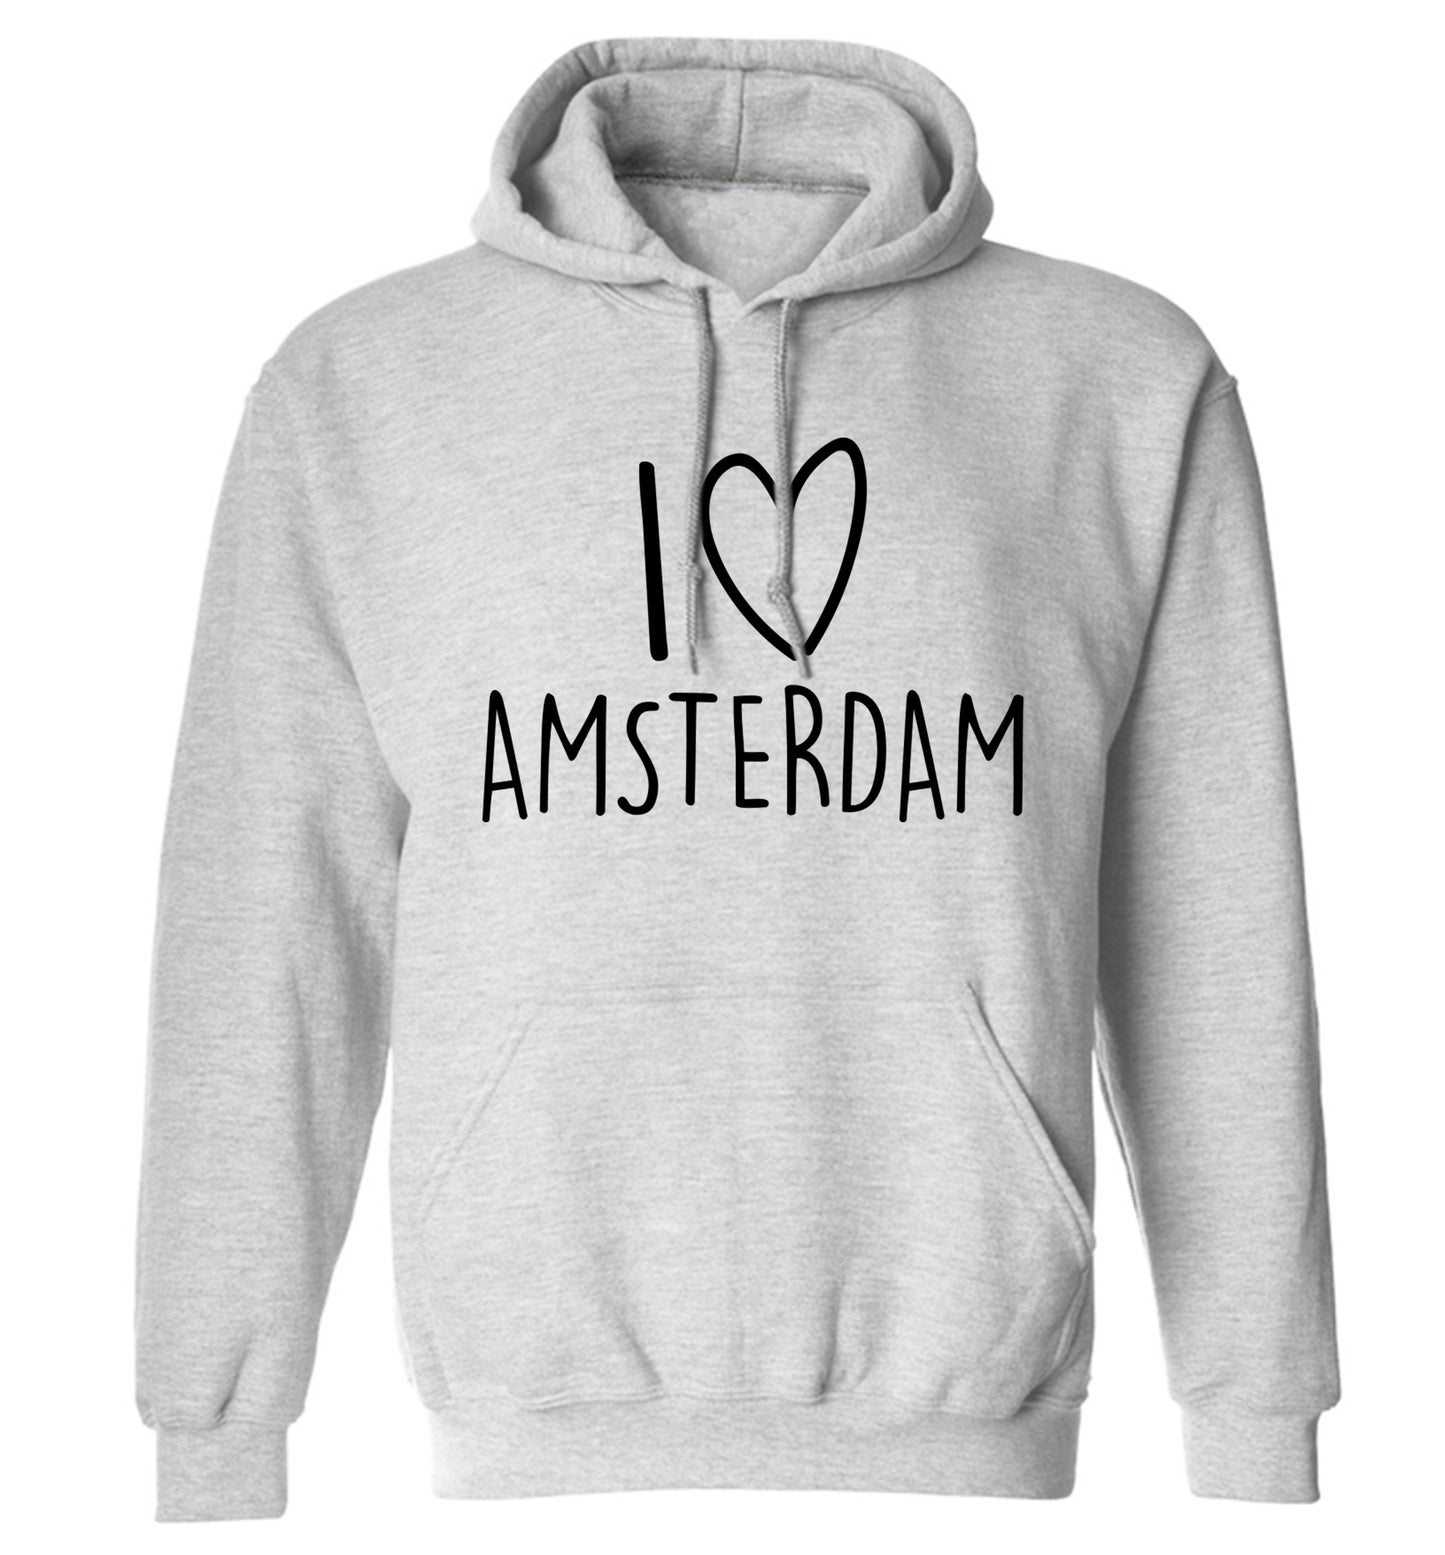 I love Amsterdam adults unisex grey hoodie 2XL